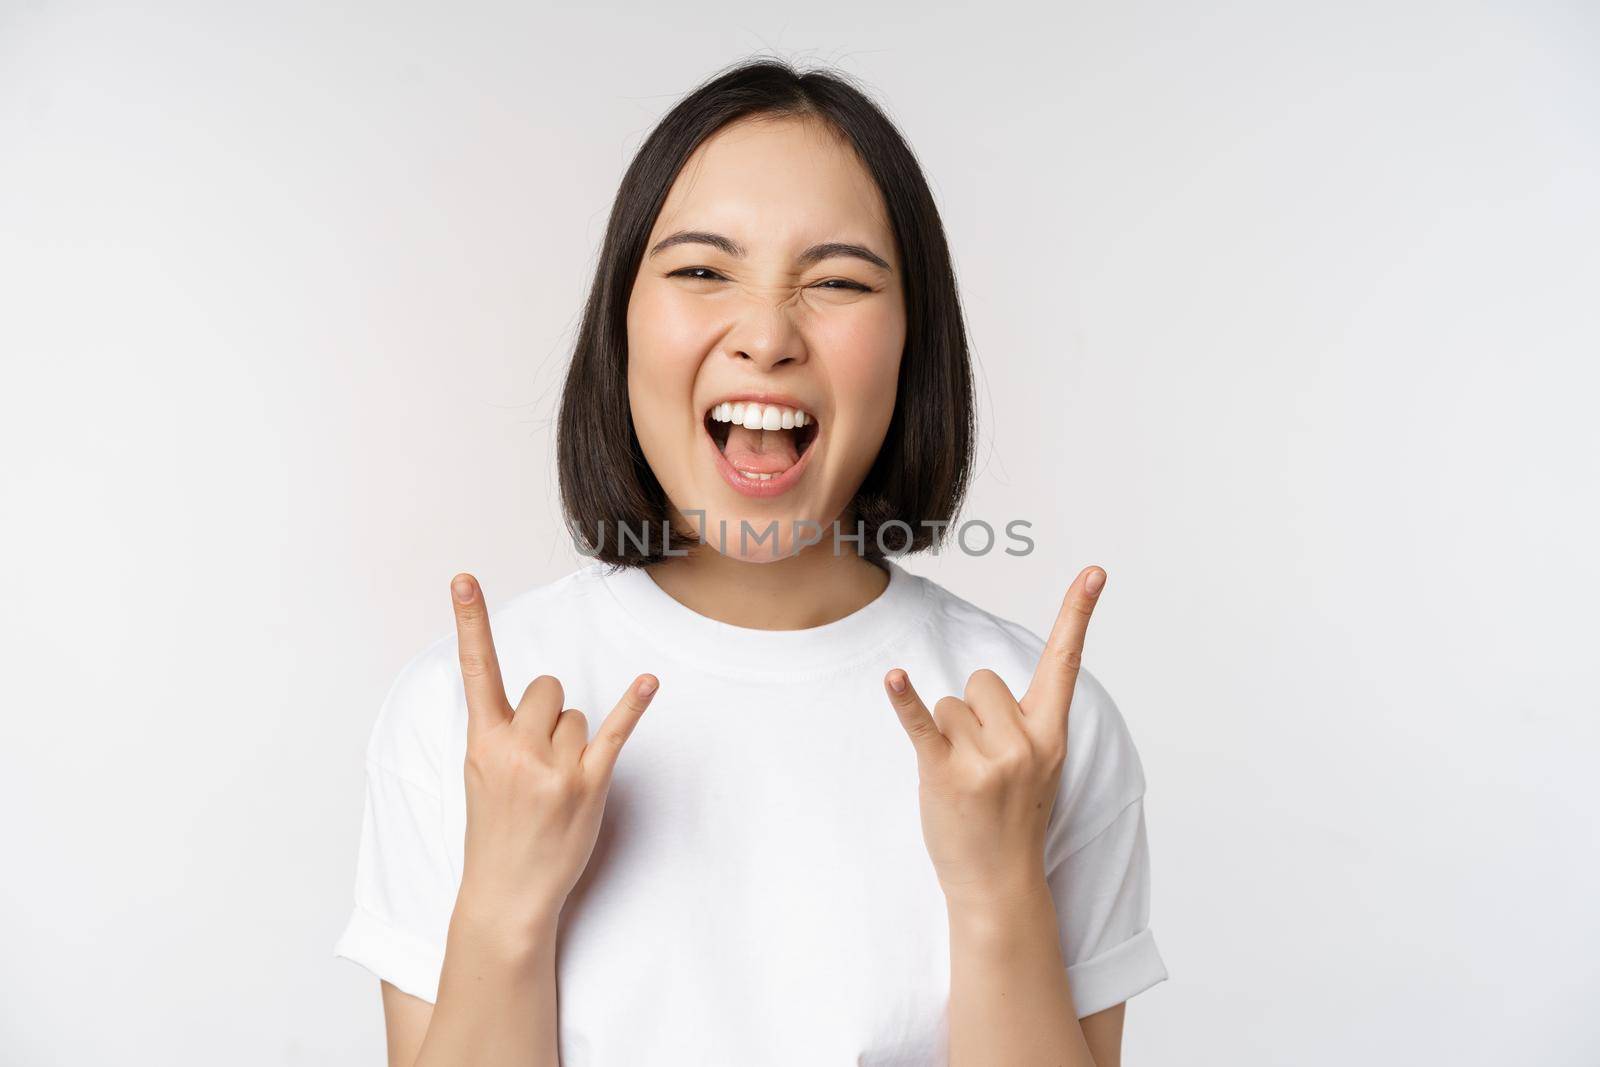 Sassy asian girl shouting, enjoying concert or festival, showing rock on, heavy metal sign, having fun, standing over white background.